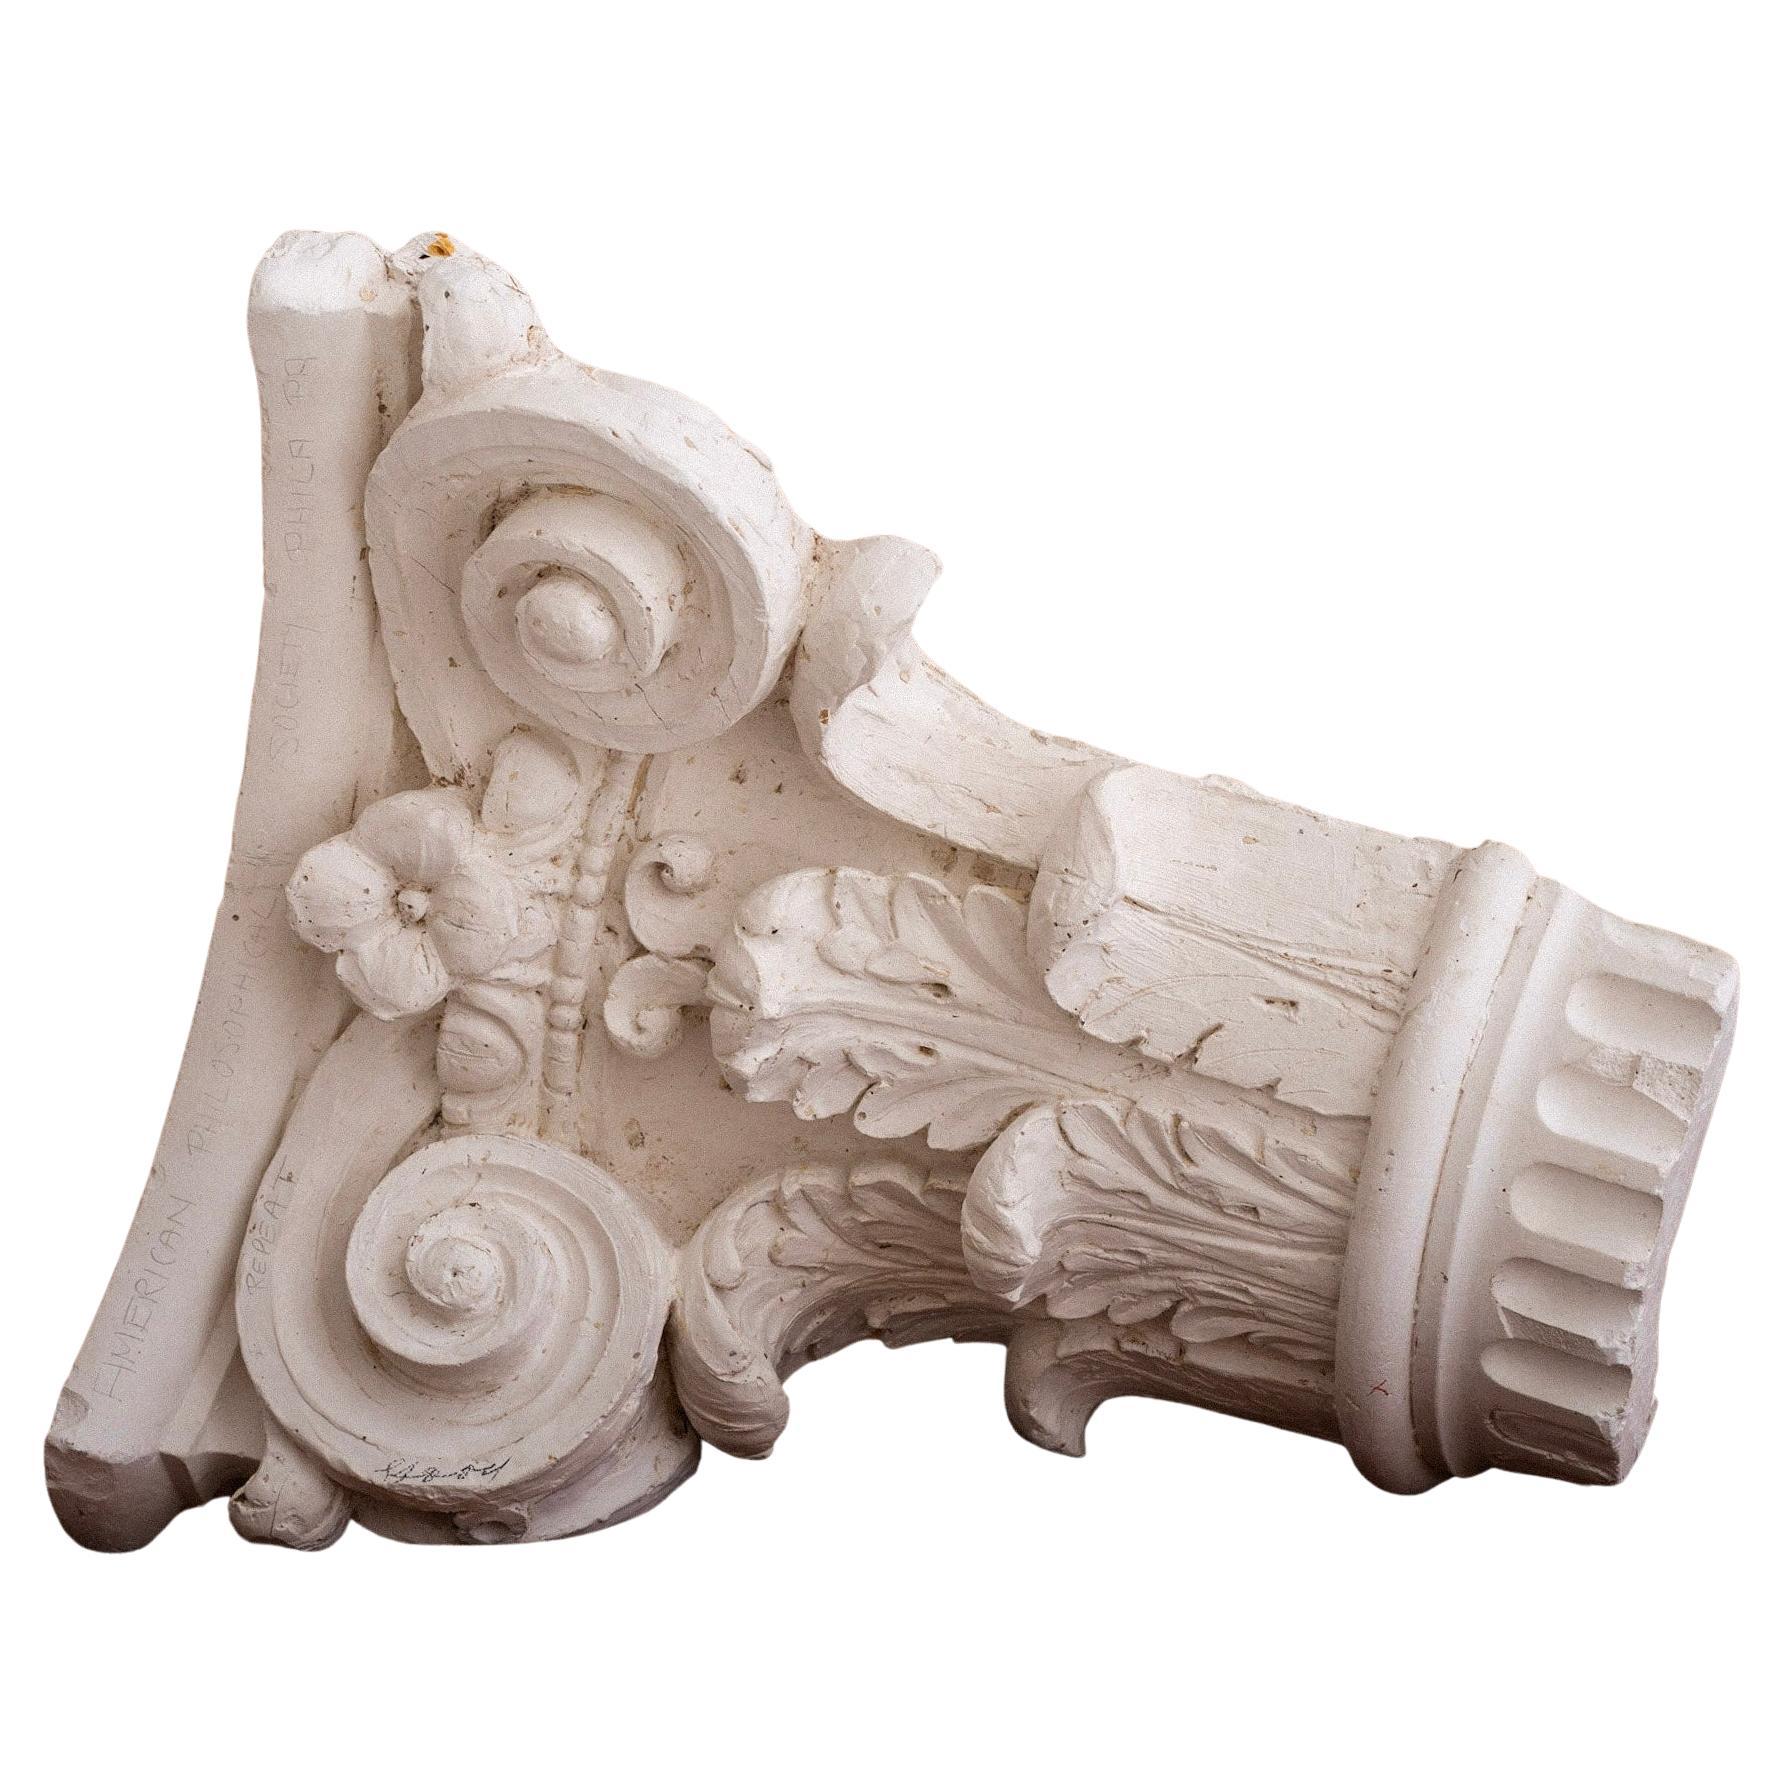 Corinithian Column Plaster Architectural Study Objet D'art en vente